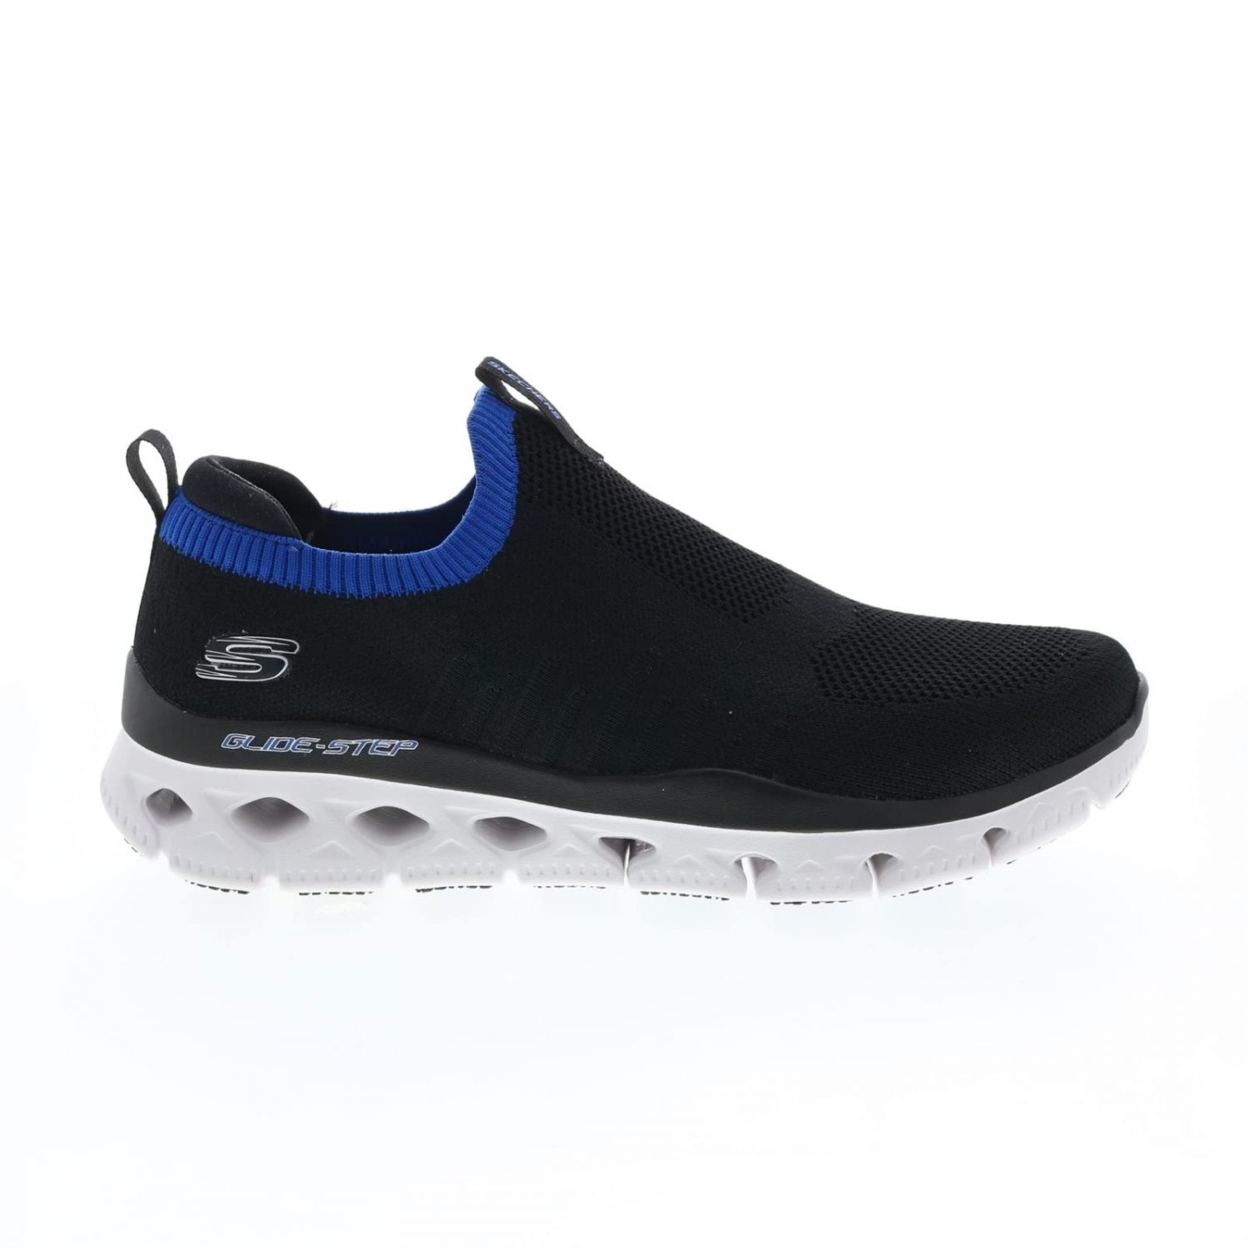 Skechers Mens Glide Step Flex Kitfix Lifestyle Sneakers Shoes BLACK/BLUE - BLACK/BLUE, 11